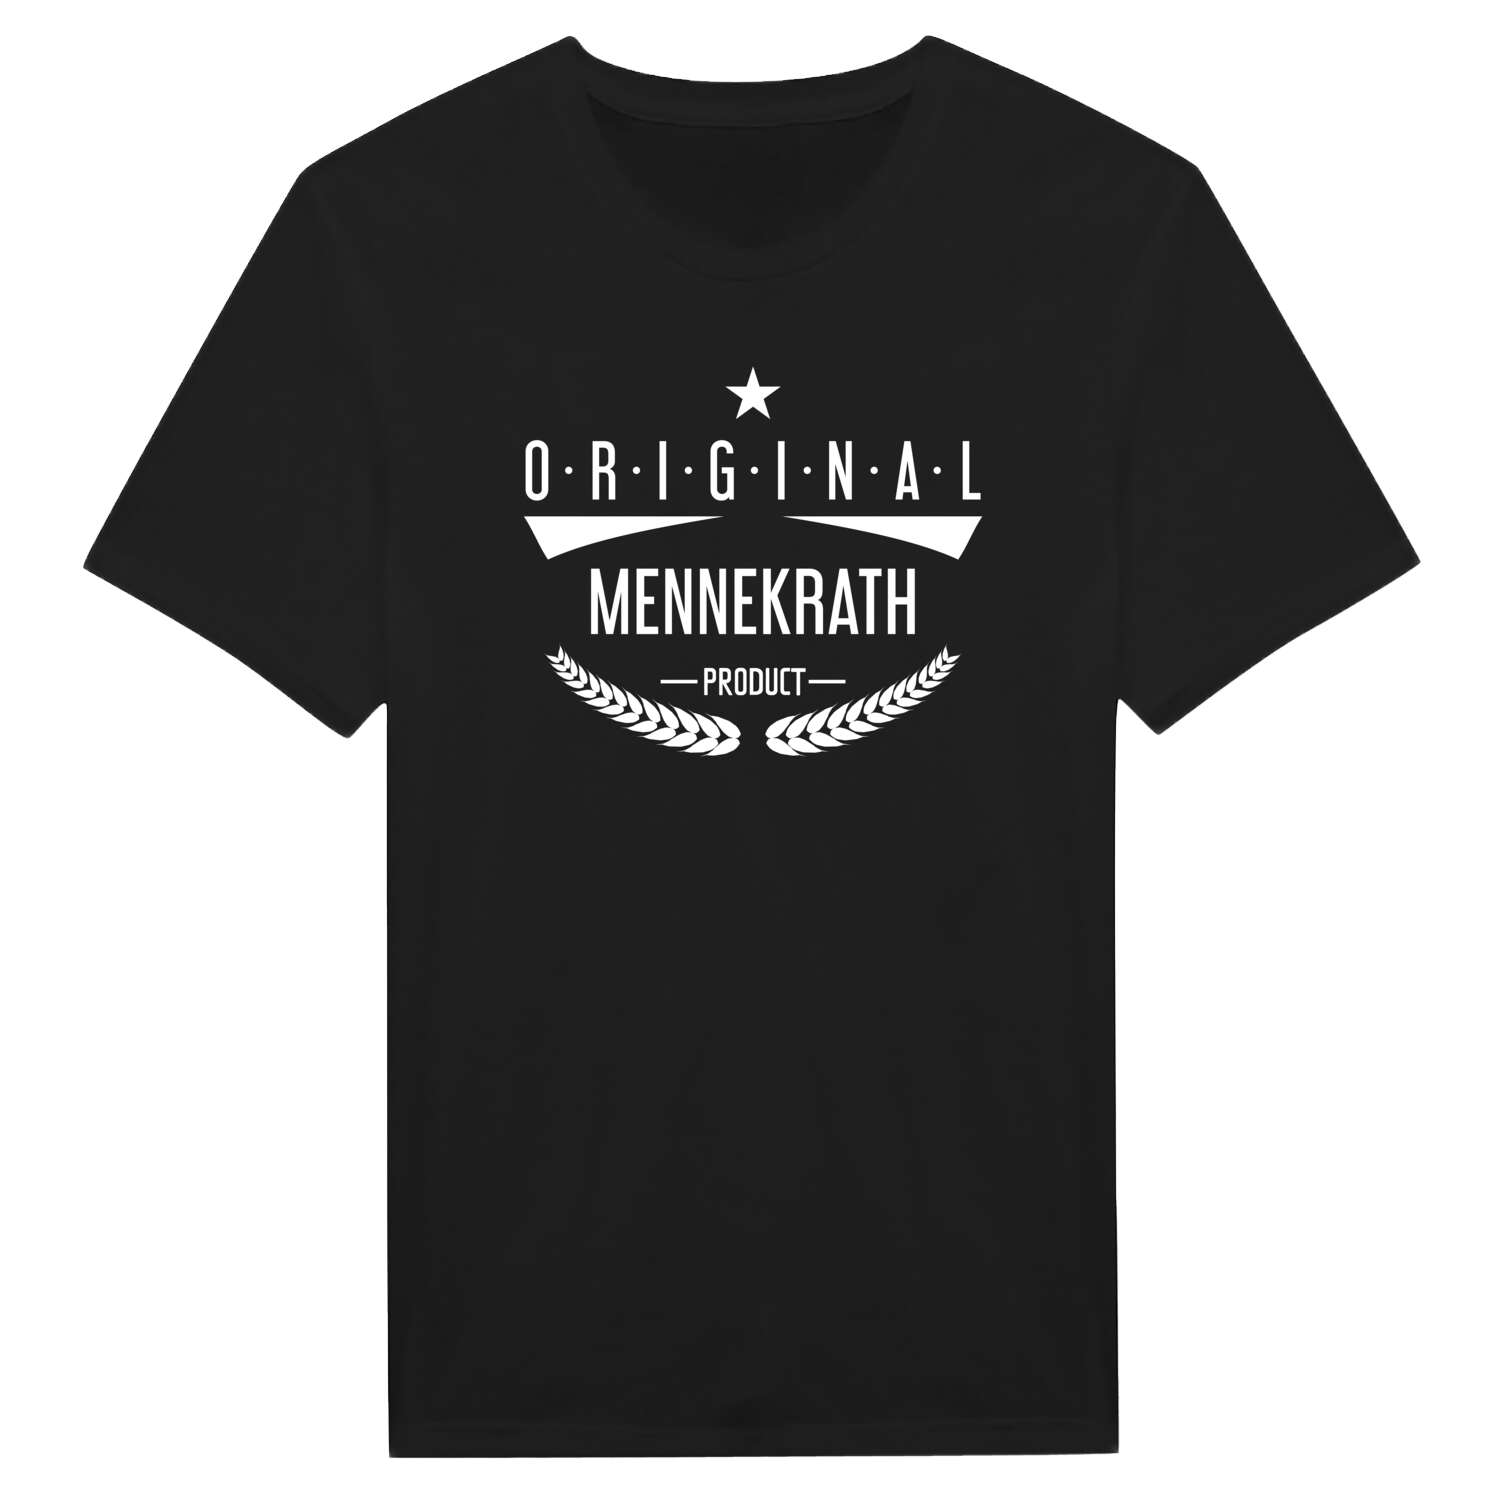 Mennekrath T-Shirt »Original Product«